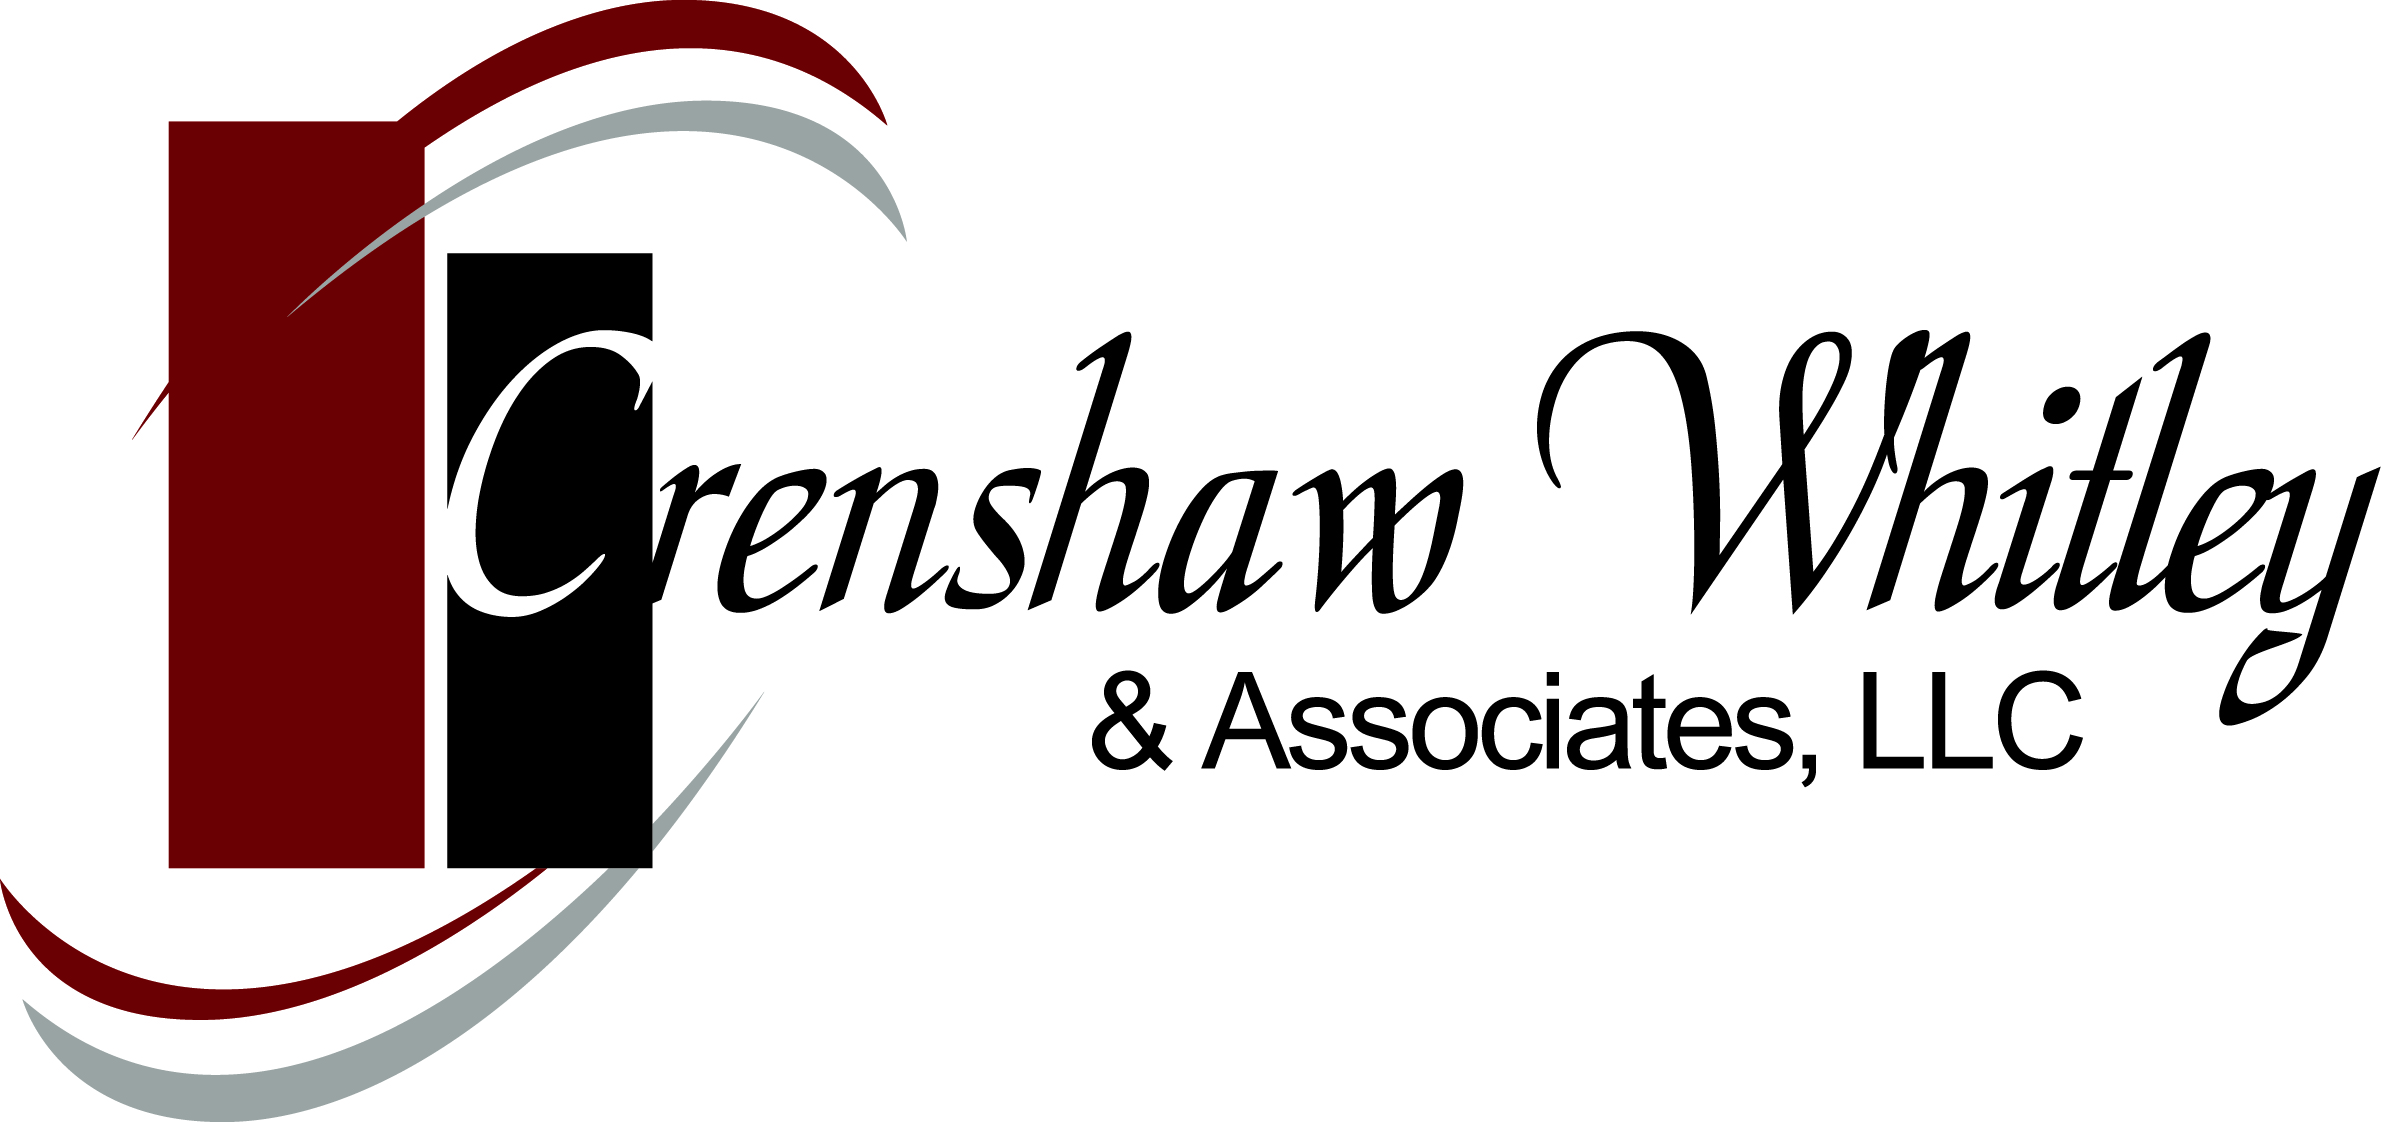 Crenshaw Whitley & Associates, LLC